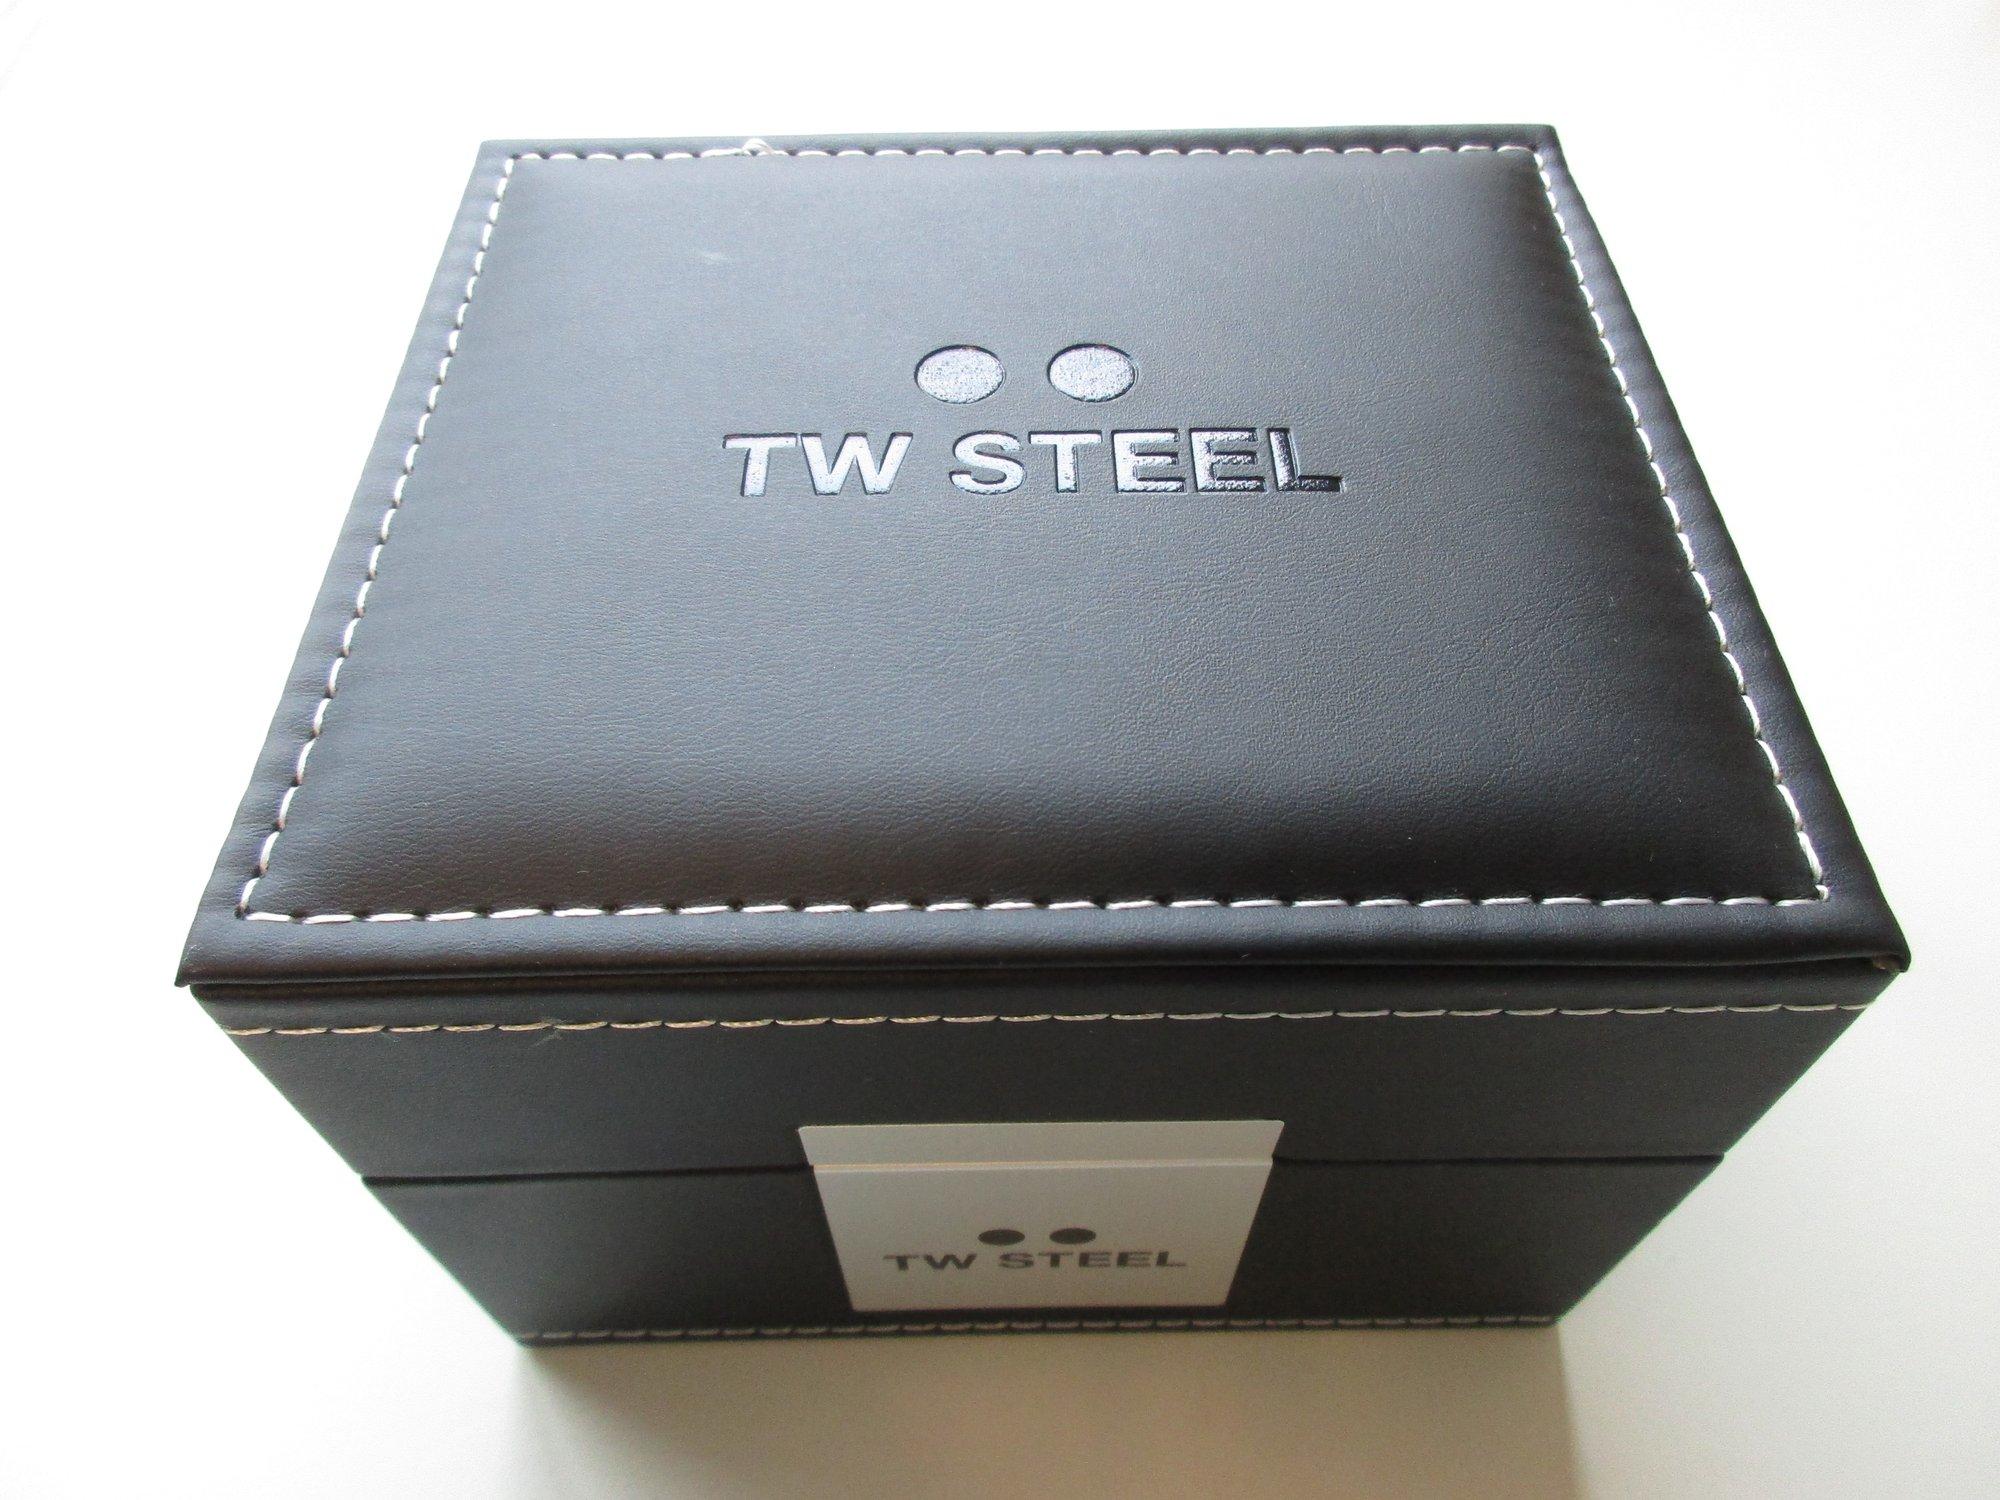 tw steel watch price